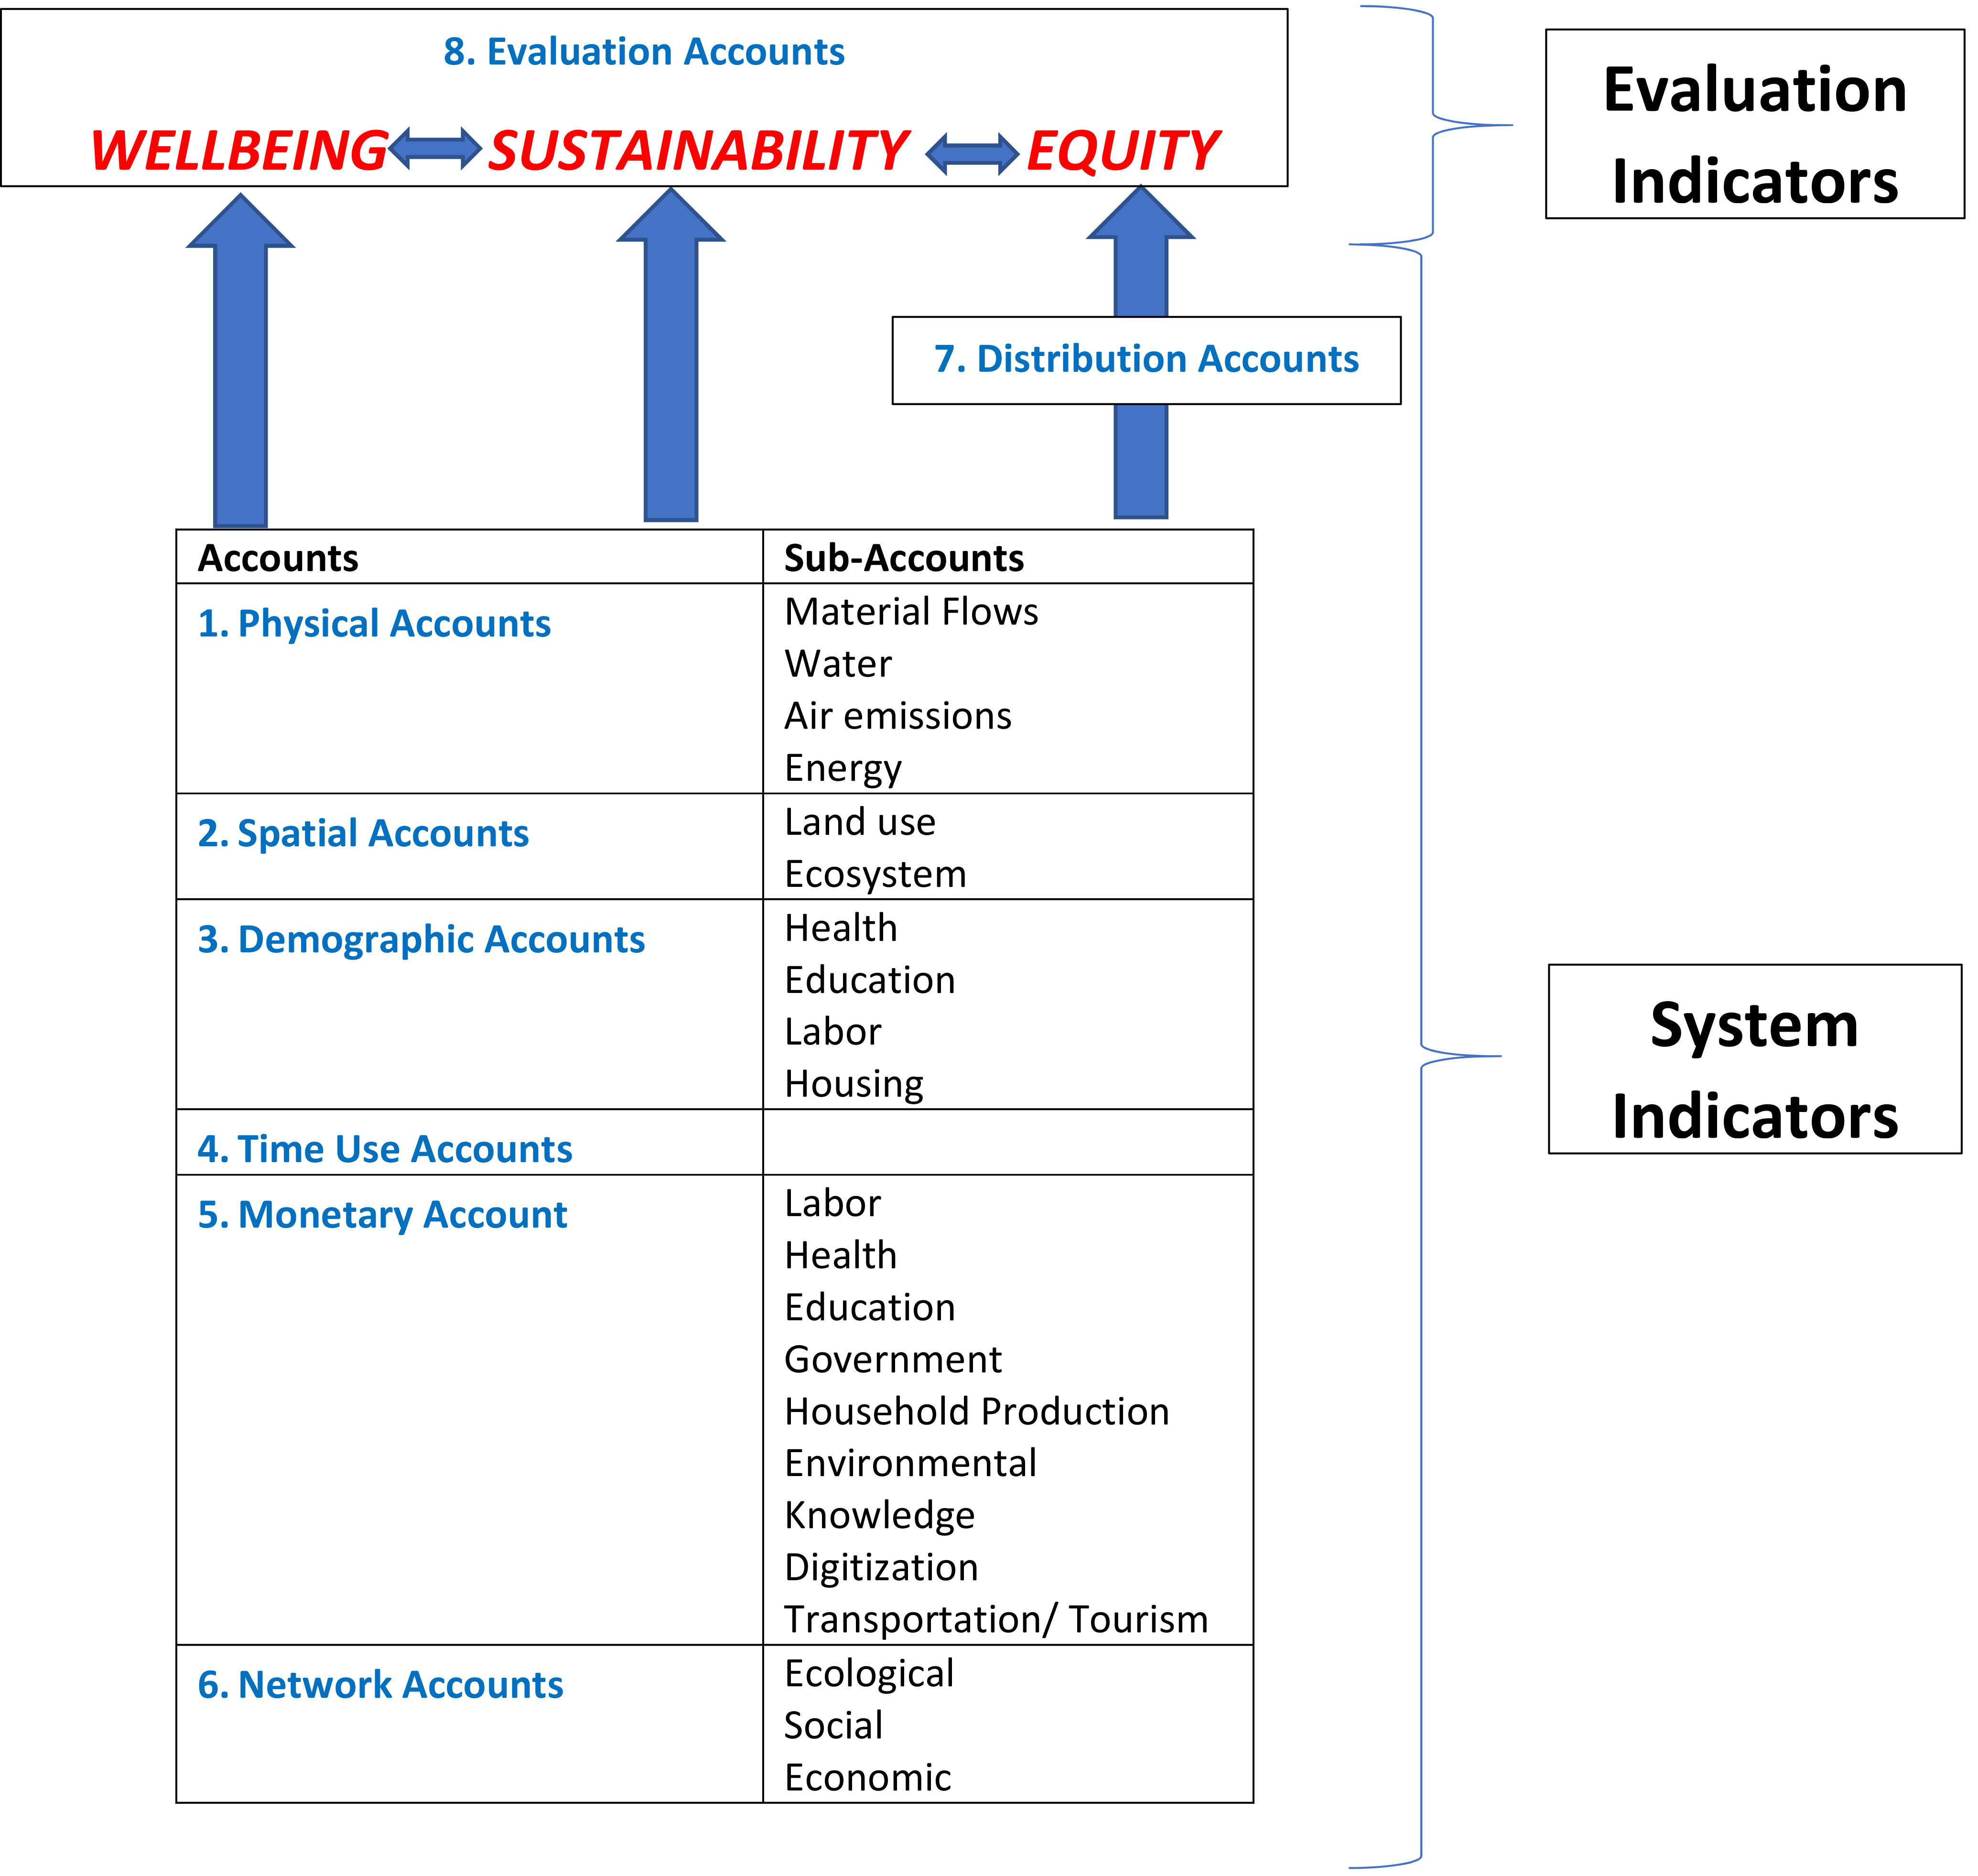 WiSE accounting framework and indicators.